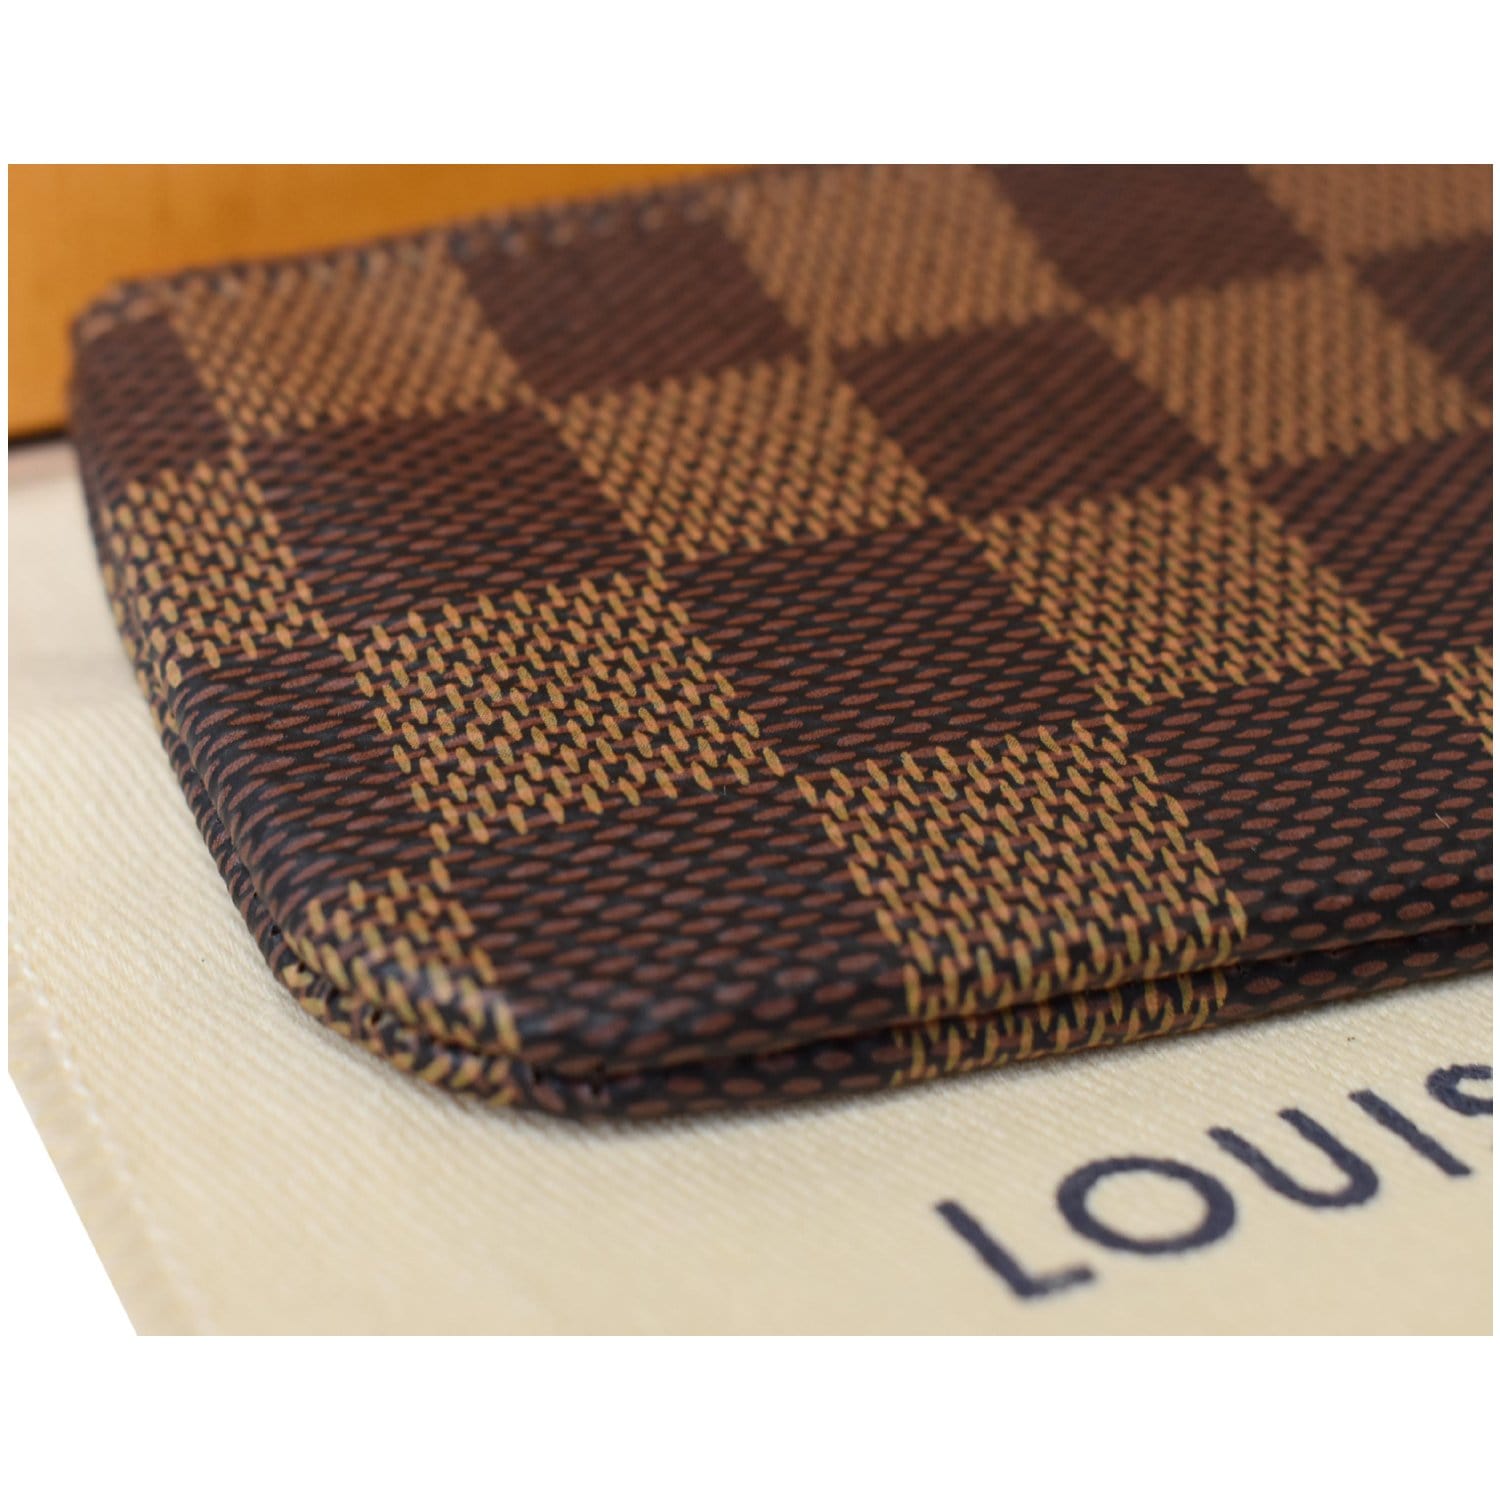 Louis Vuitton Wallet Florin Damier Ebene Brown in Canvas - US